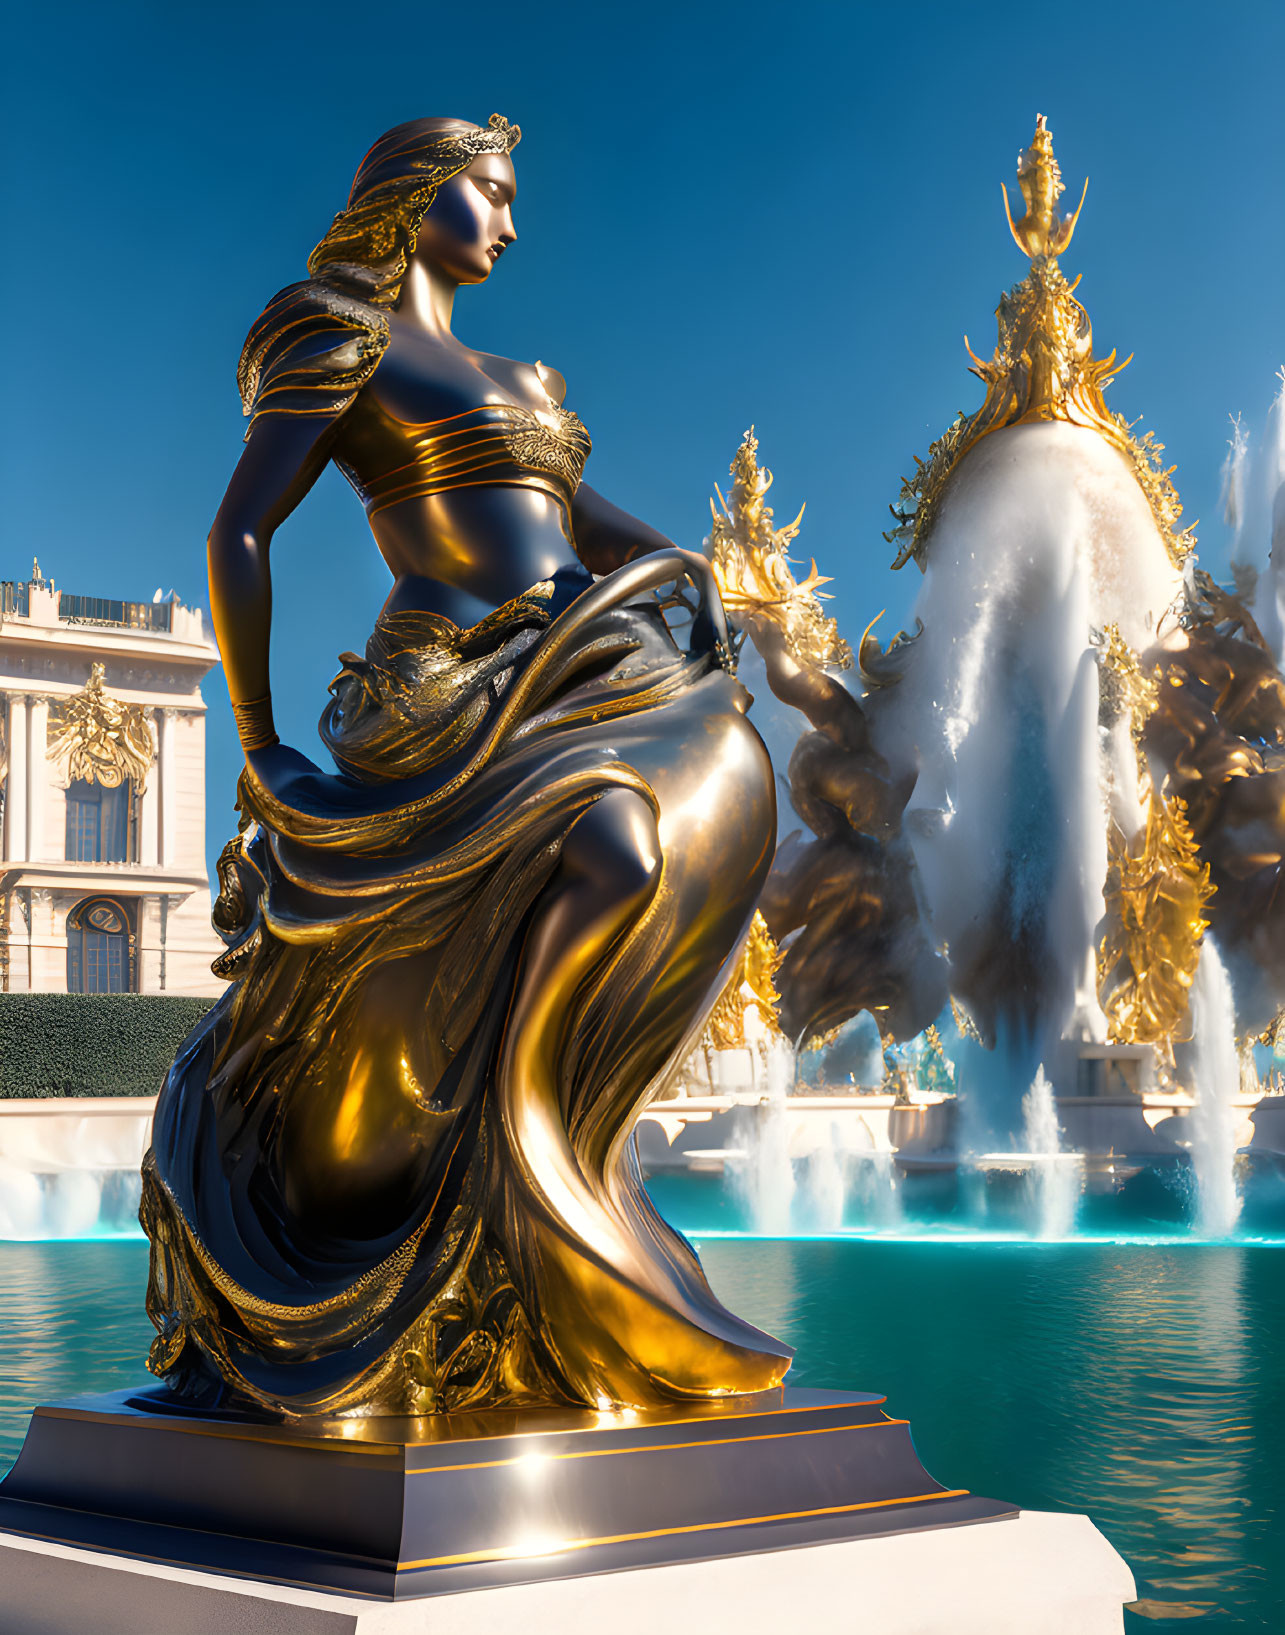 Fountain of the Golden Goddess